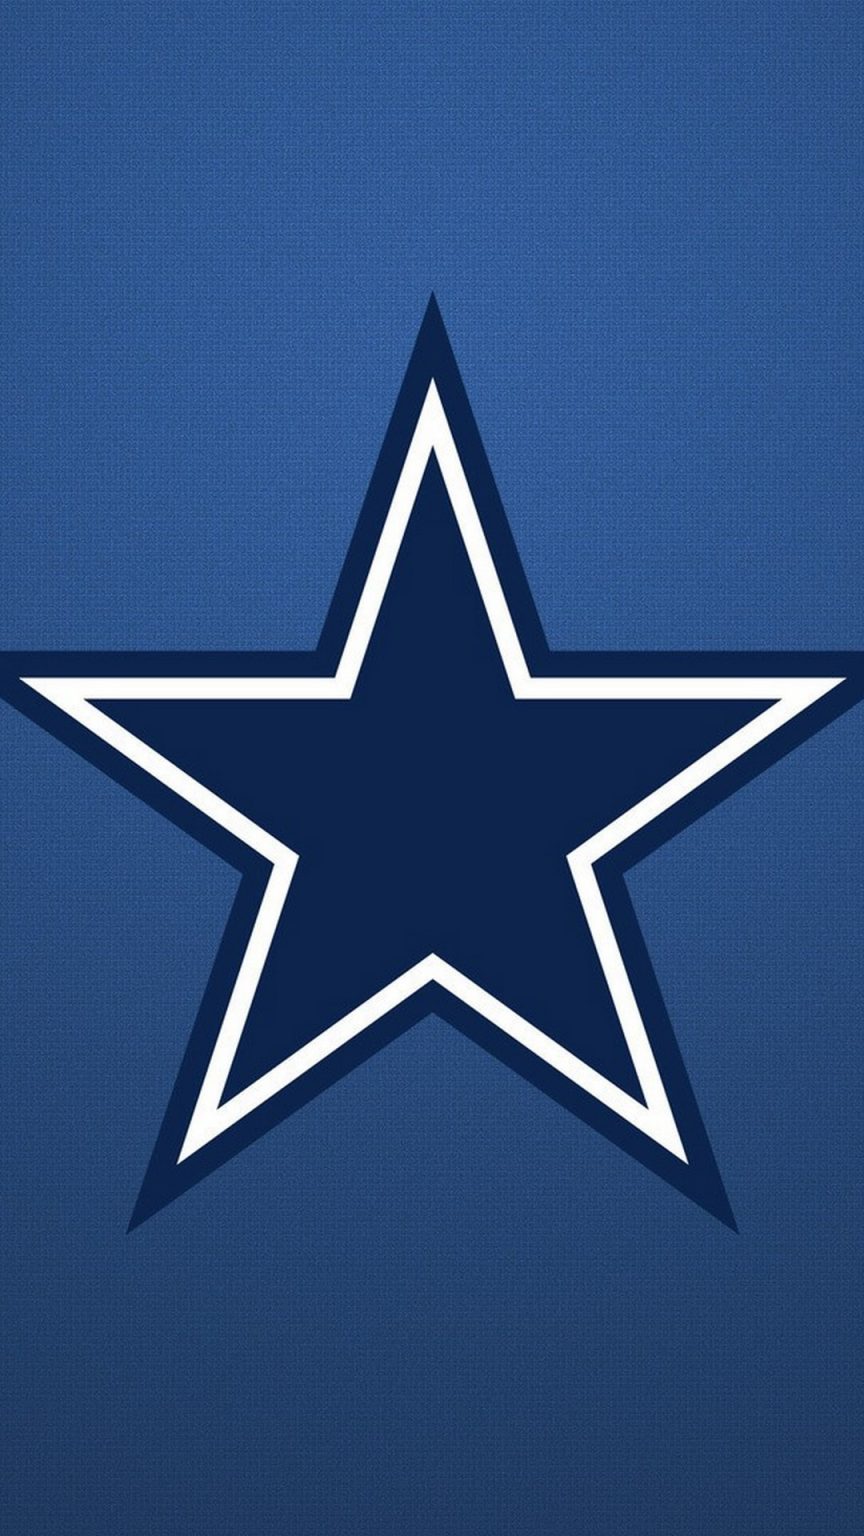 Screensaver iPhone Dallas Cowboys - 2020 NFL iPhone Wallpaper